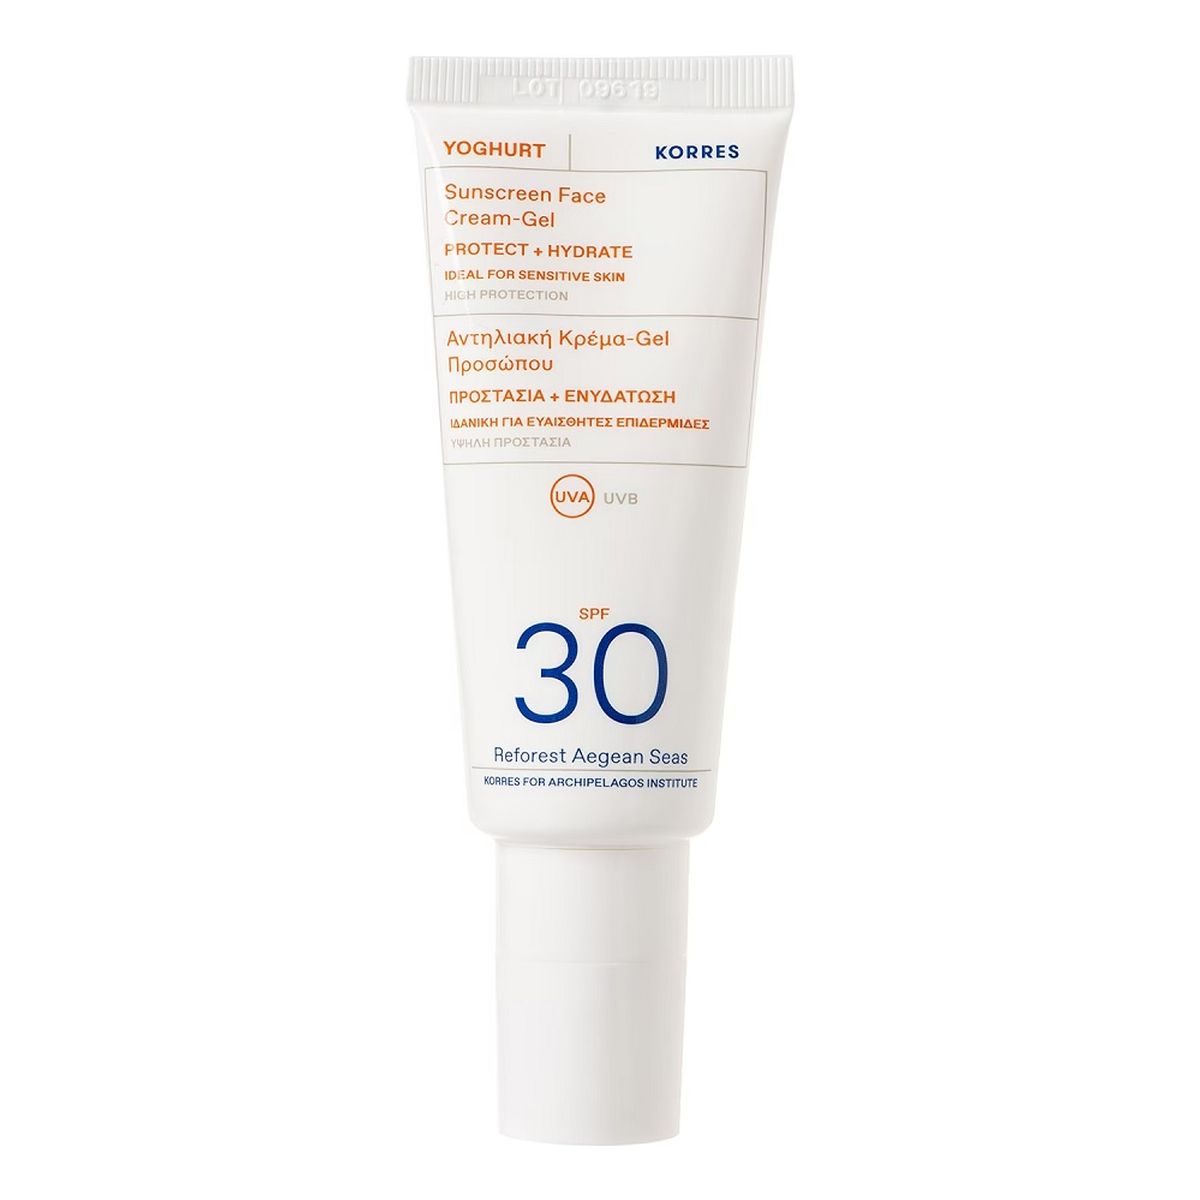 Korres Yoghurt Sunscreen Face Cream-Gel Krem-żel ochronny do twarzy spf30 40ml